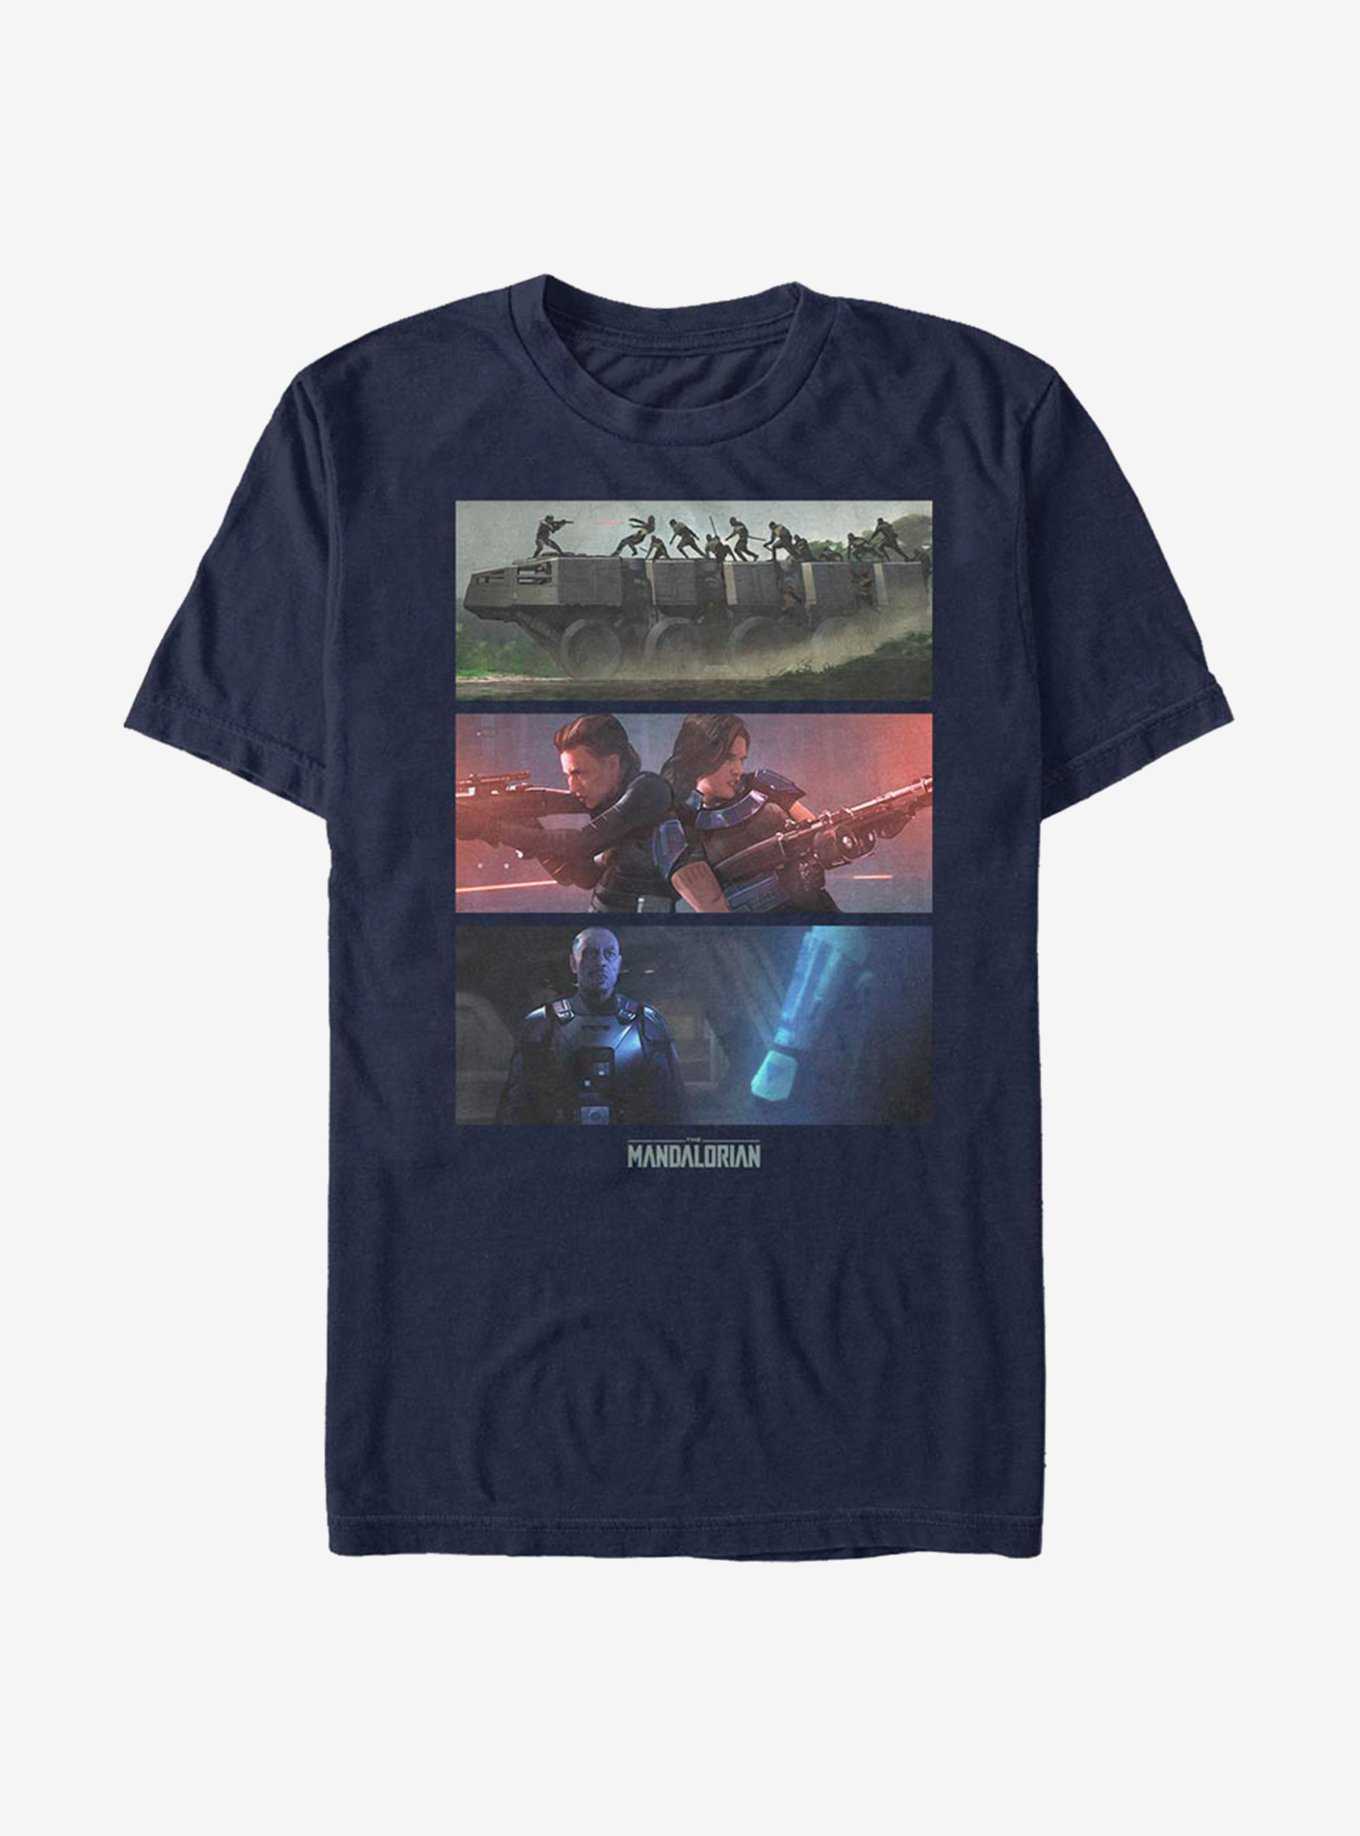 Star Wars The Mandalorian Battle Scene T-Shirt, , hi-res